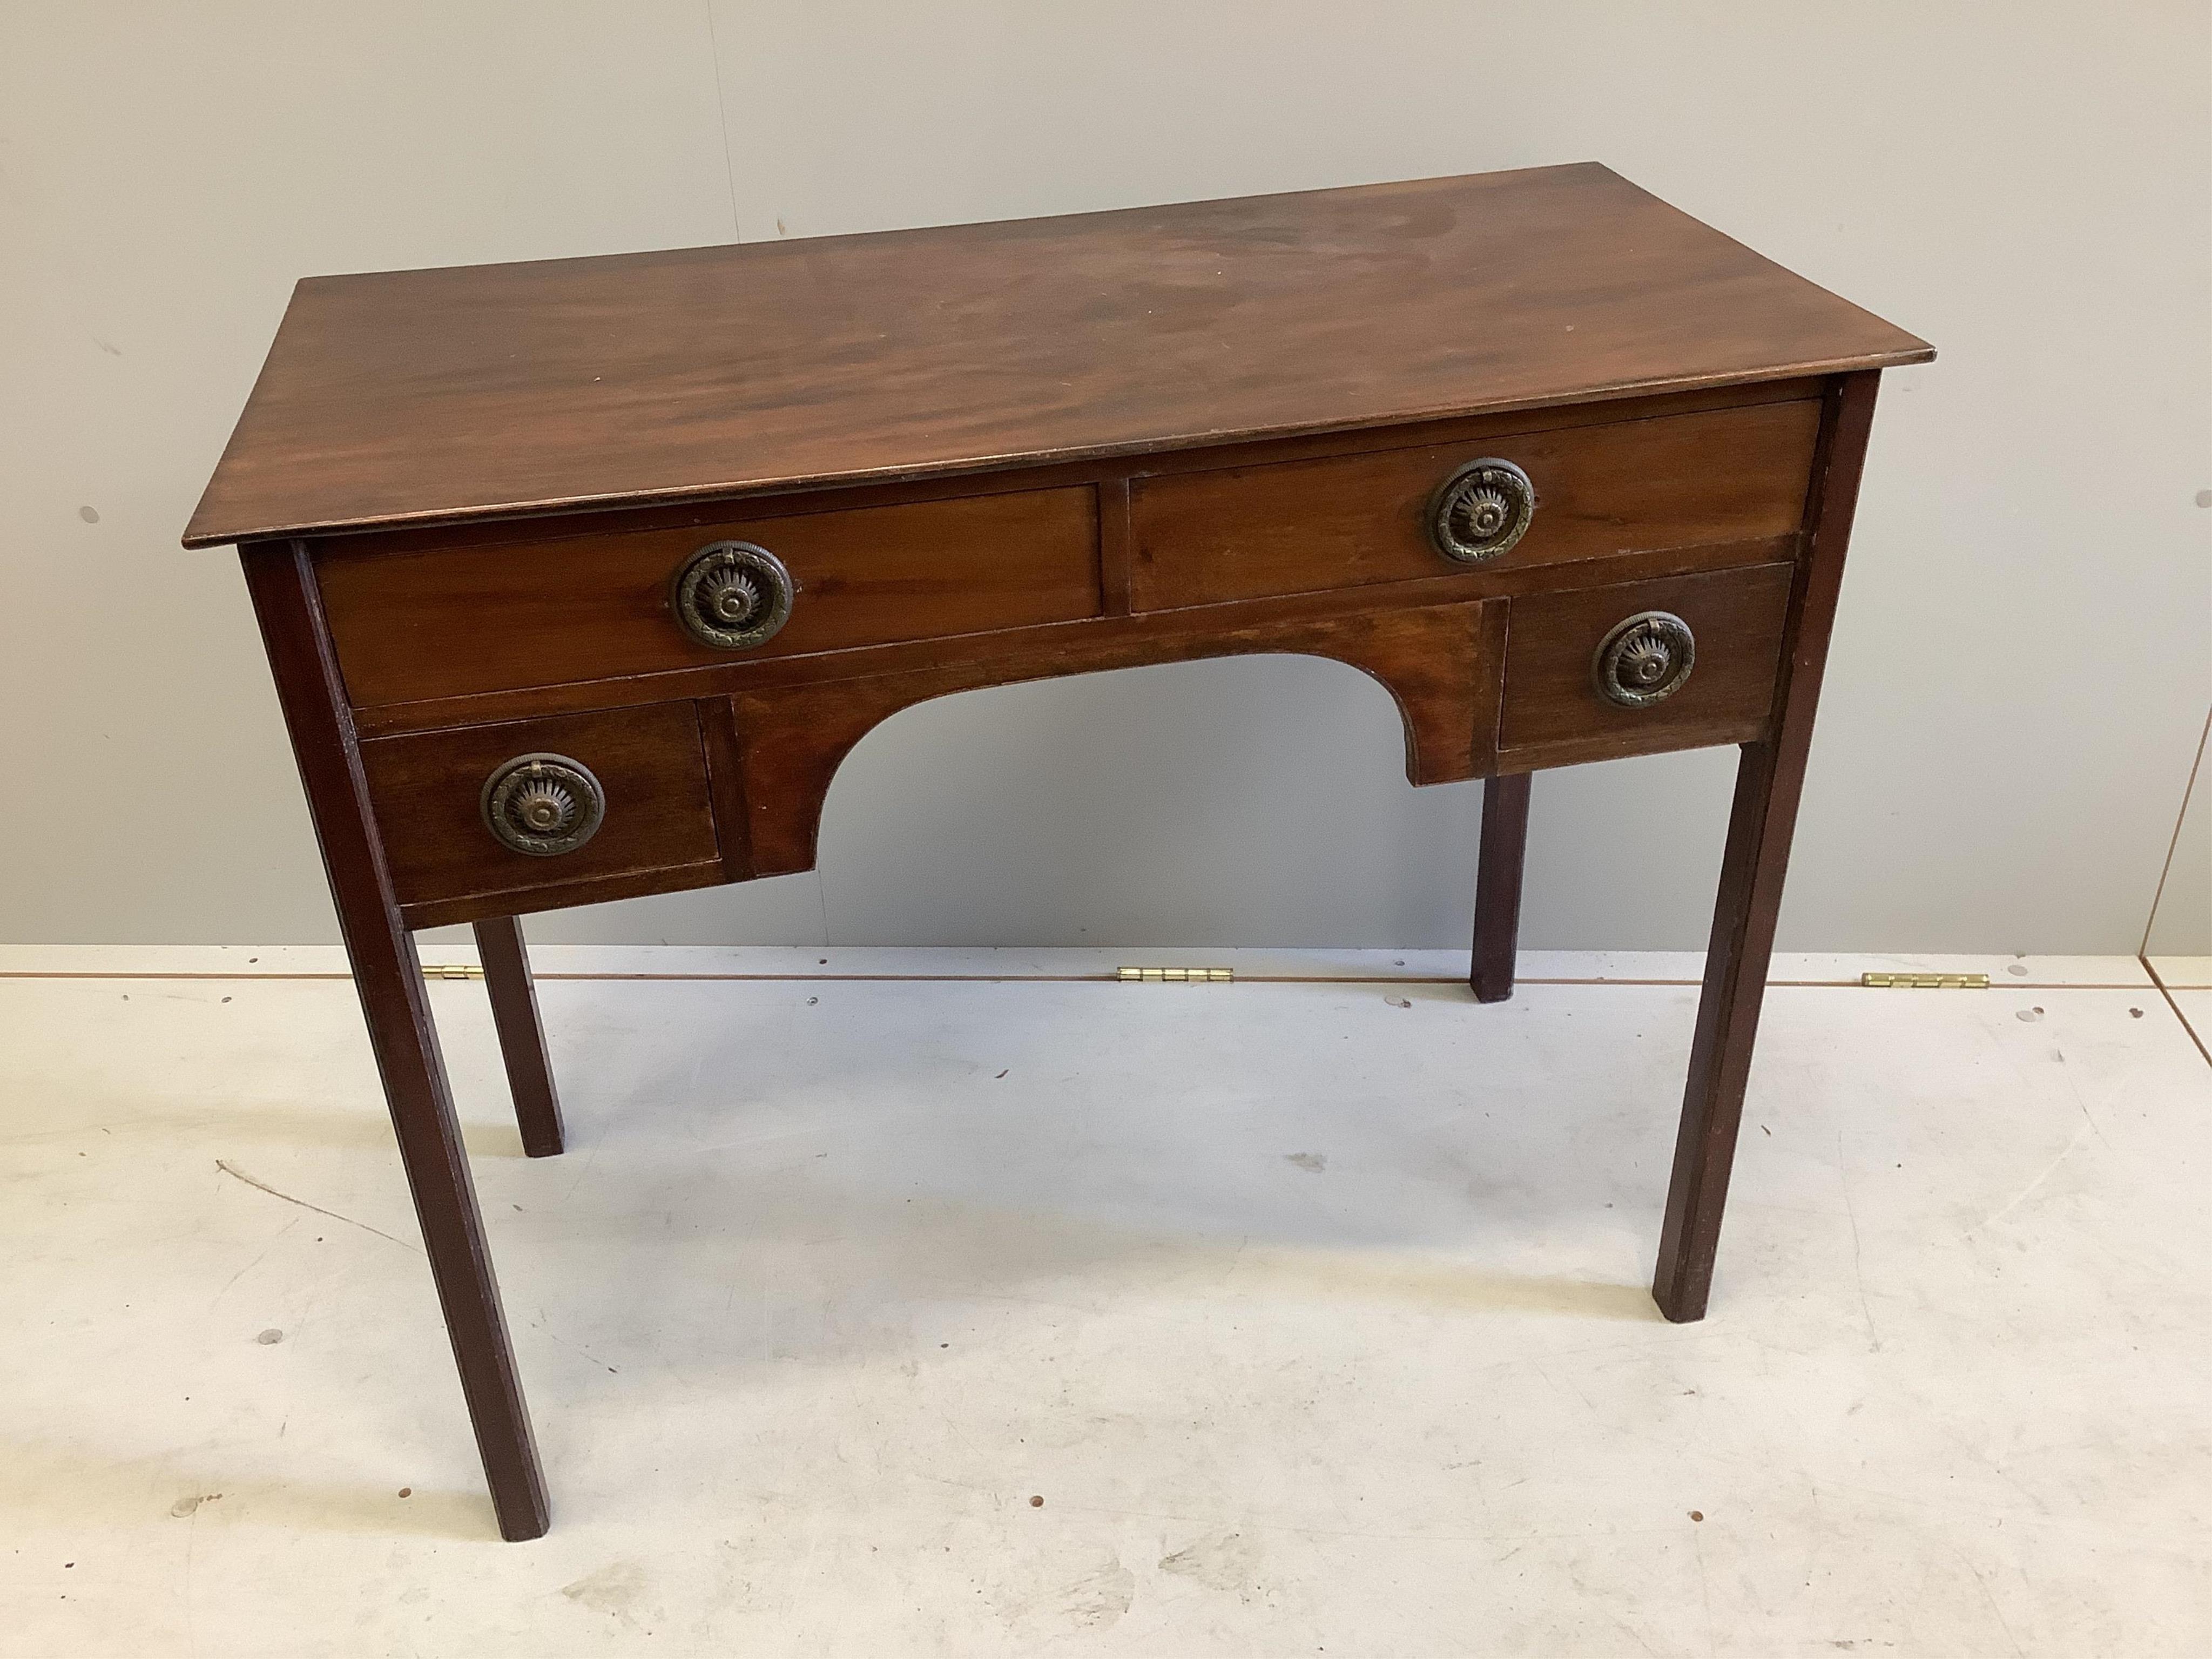 A George III mahogany kneehole dressing table, width 90cm, depth 44cm, height 73cm. Condition - fair